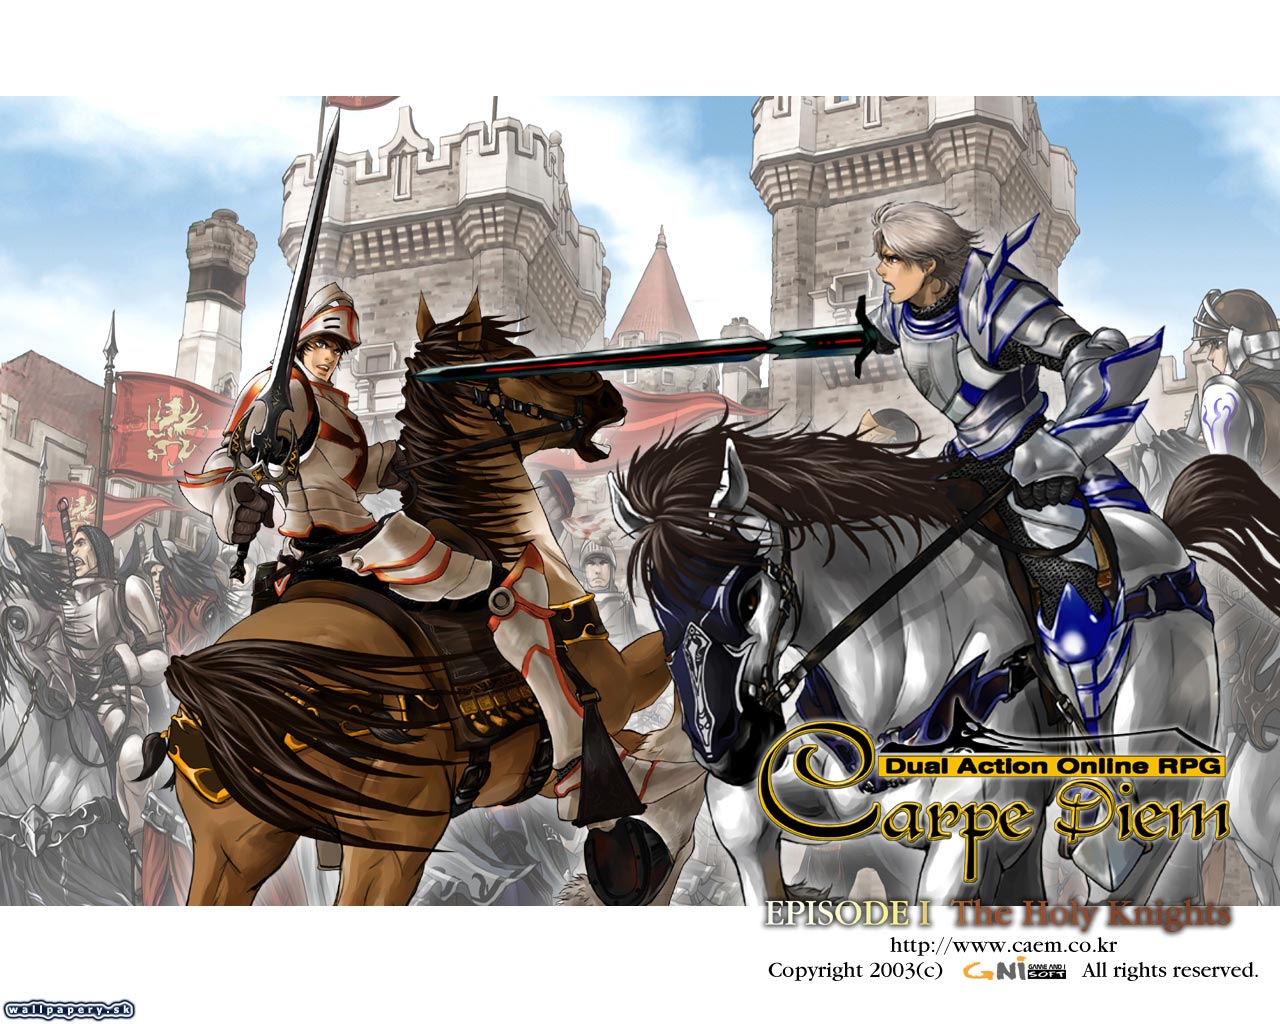 Carpe Diem: Episode I - The Holy Knights - wallpaper 6